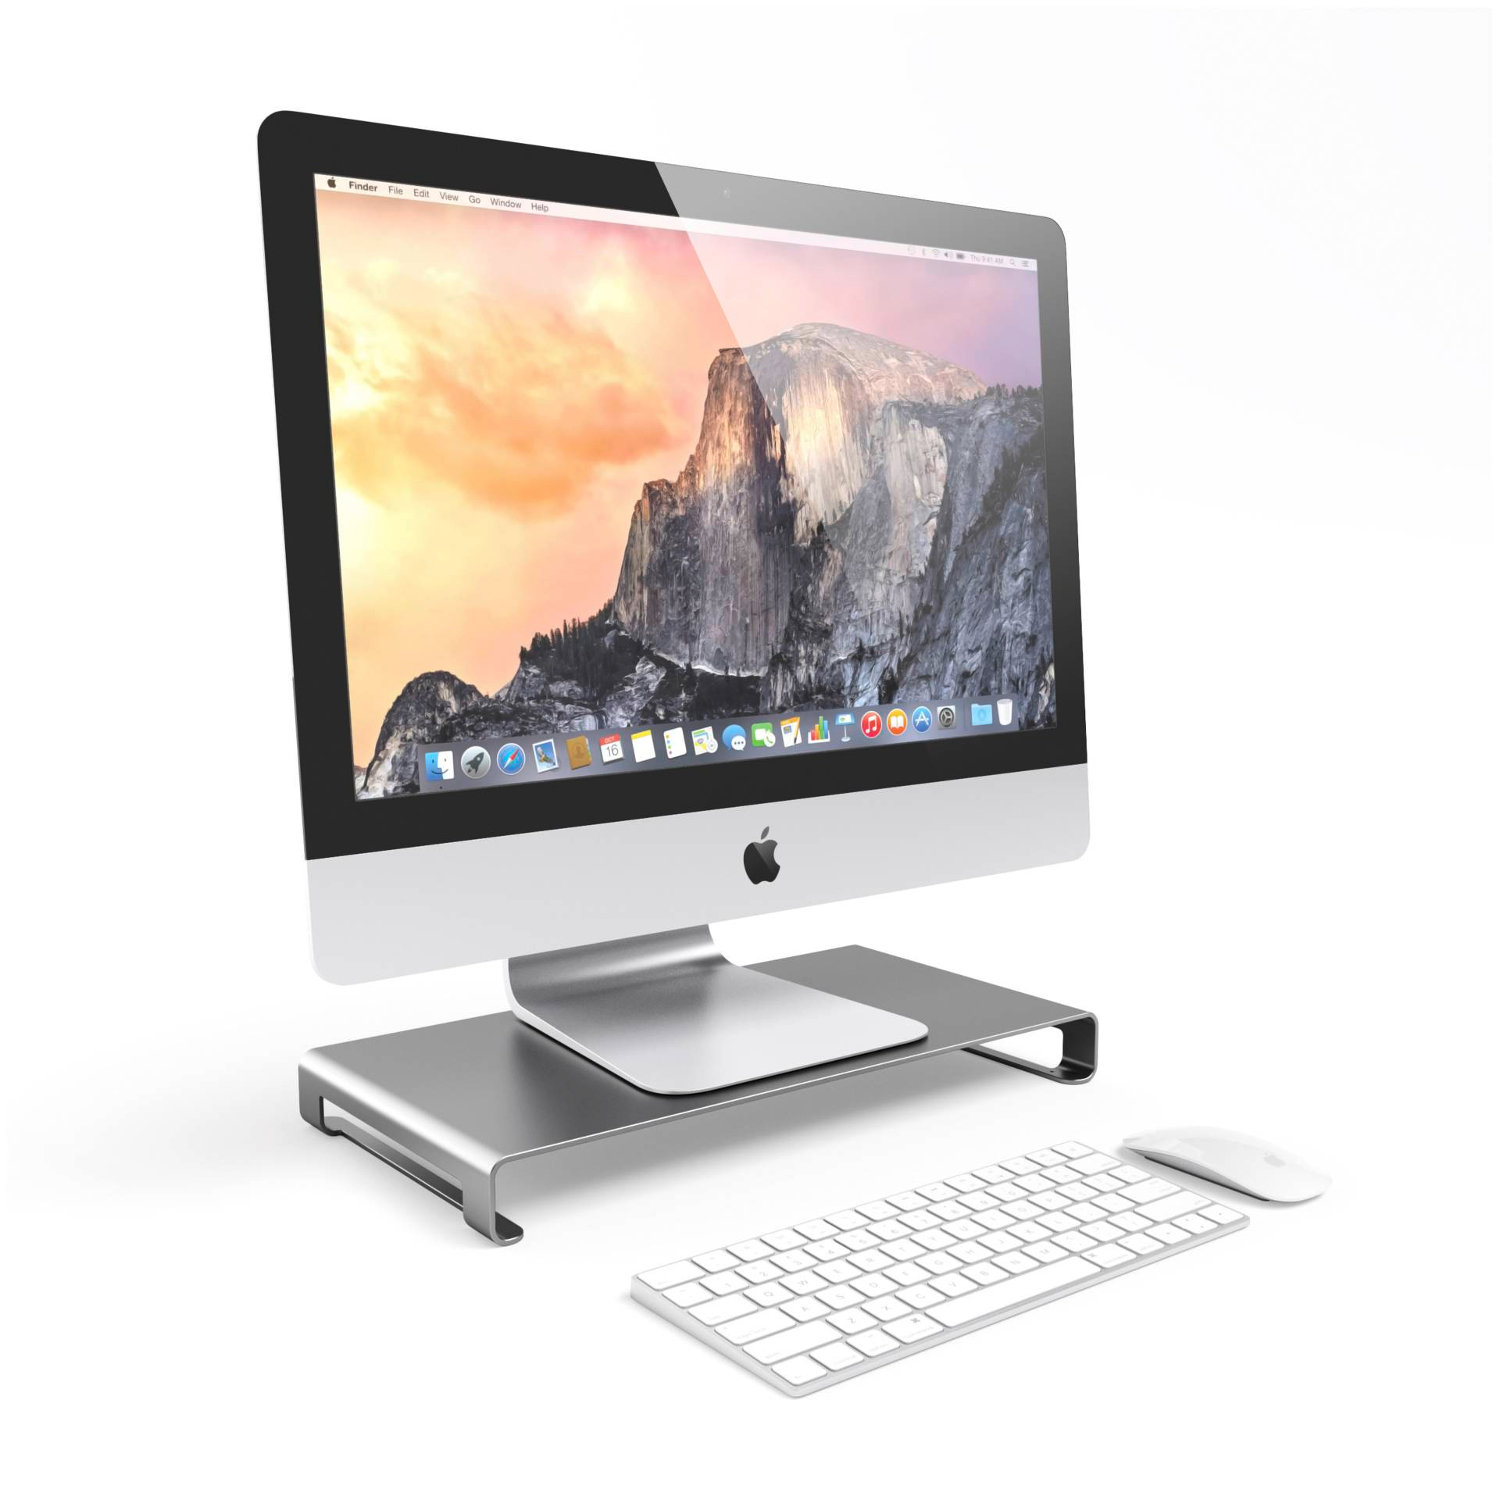 Satechi Aluminium monitor stand shown with iMac